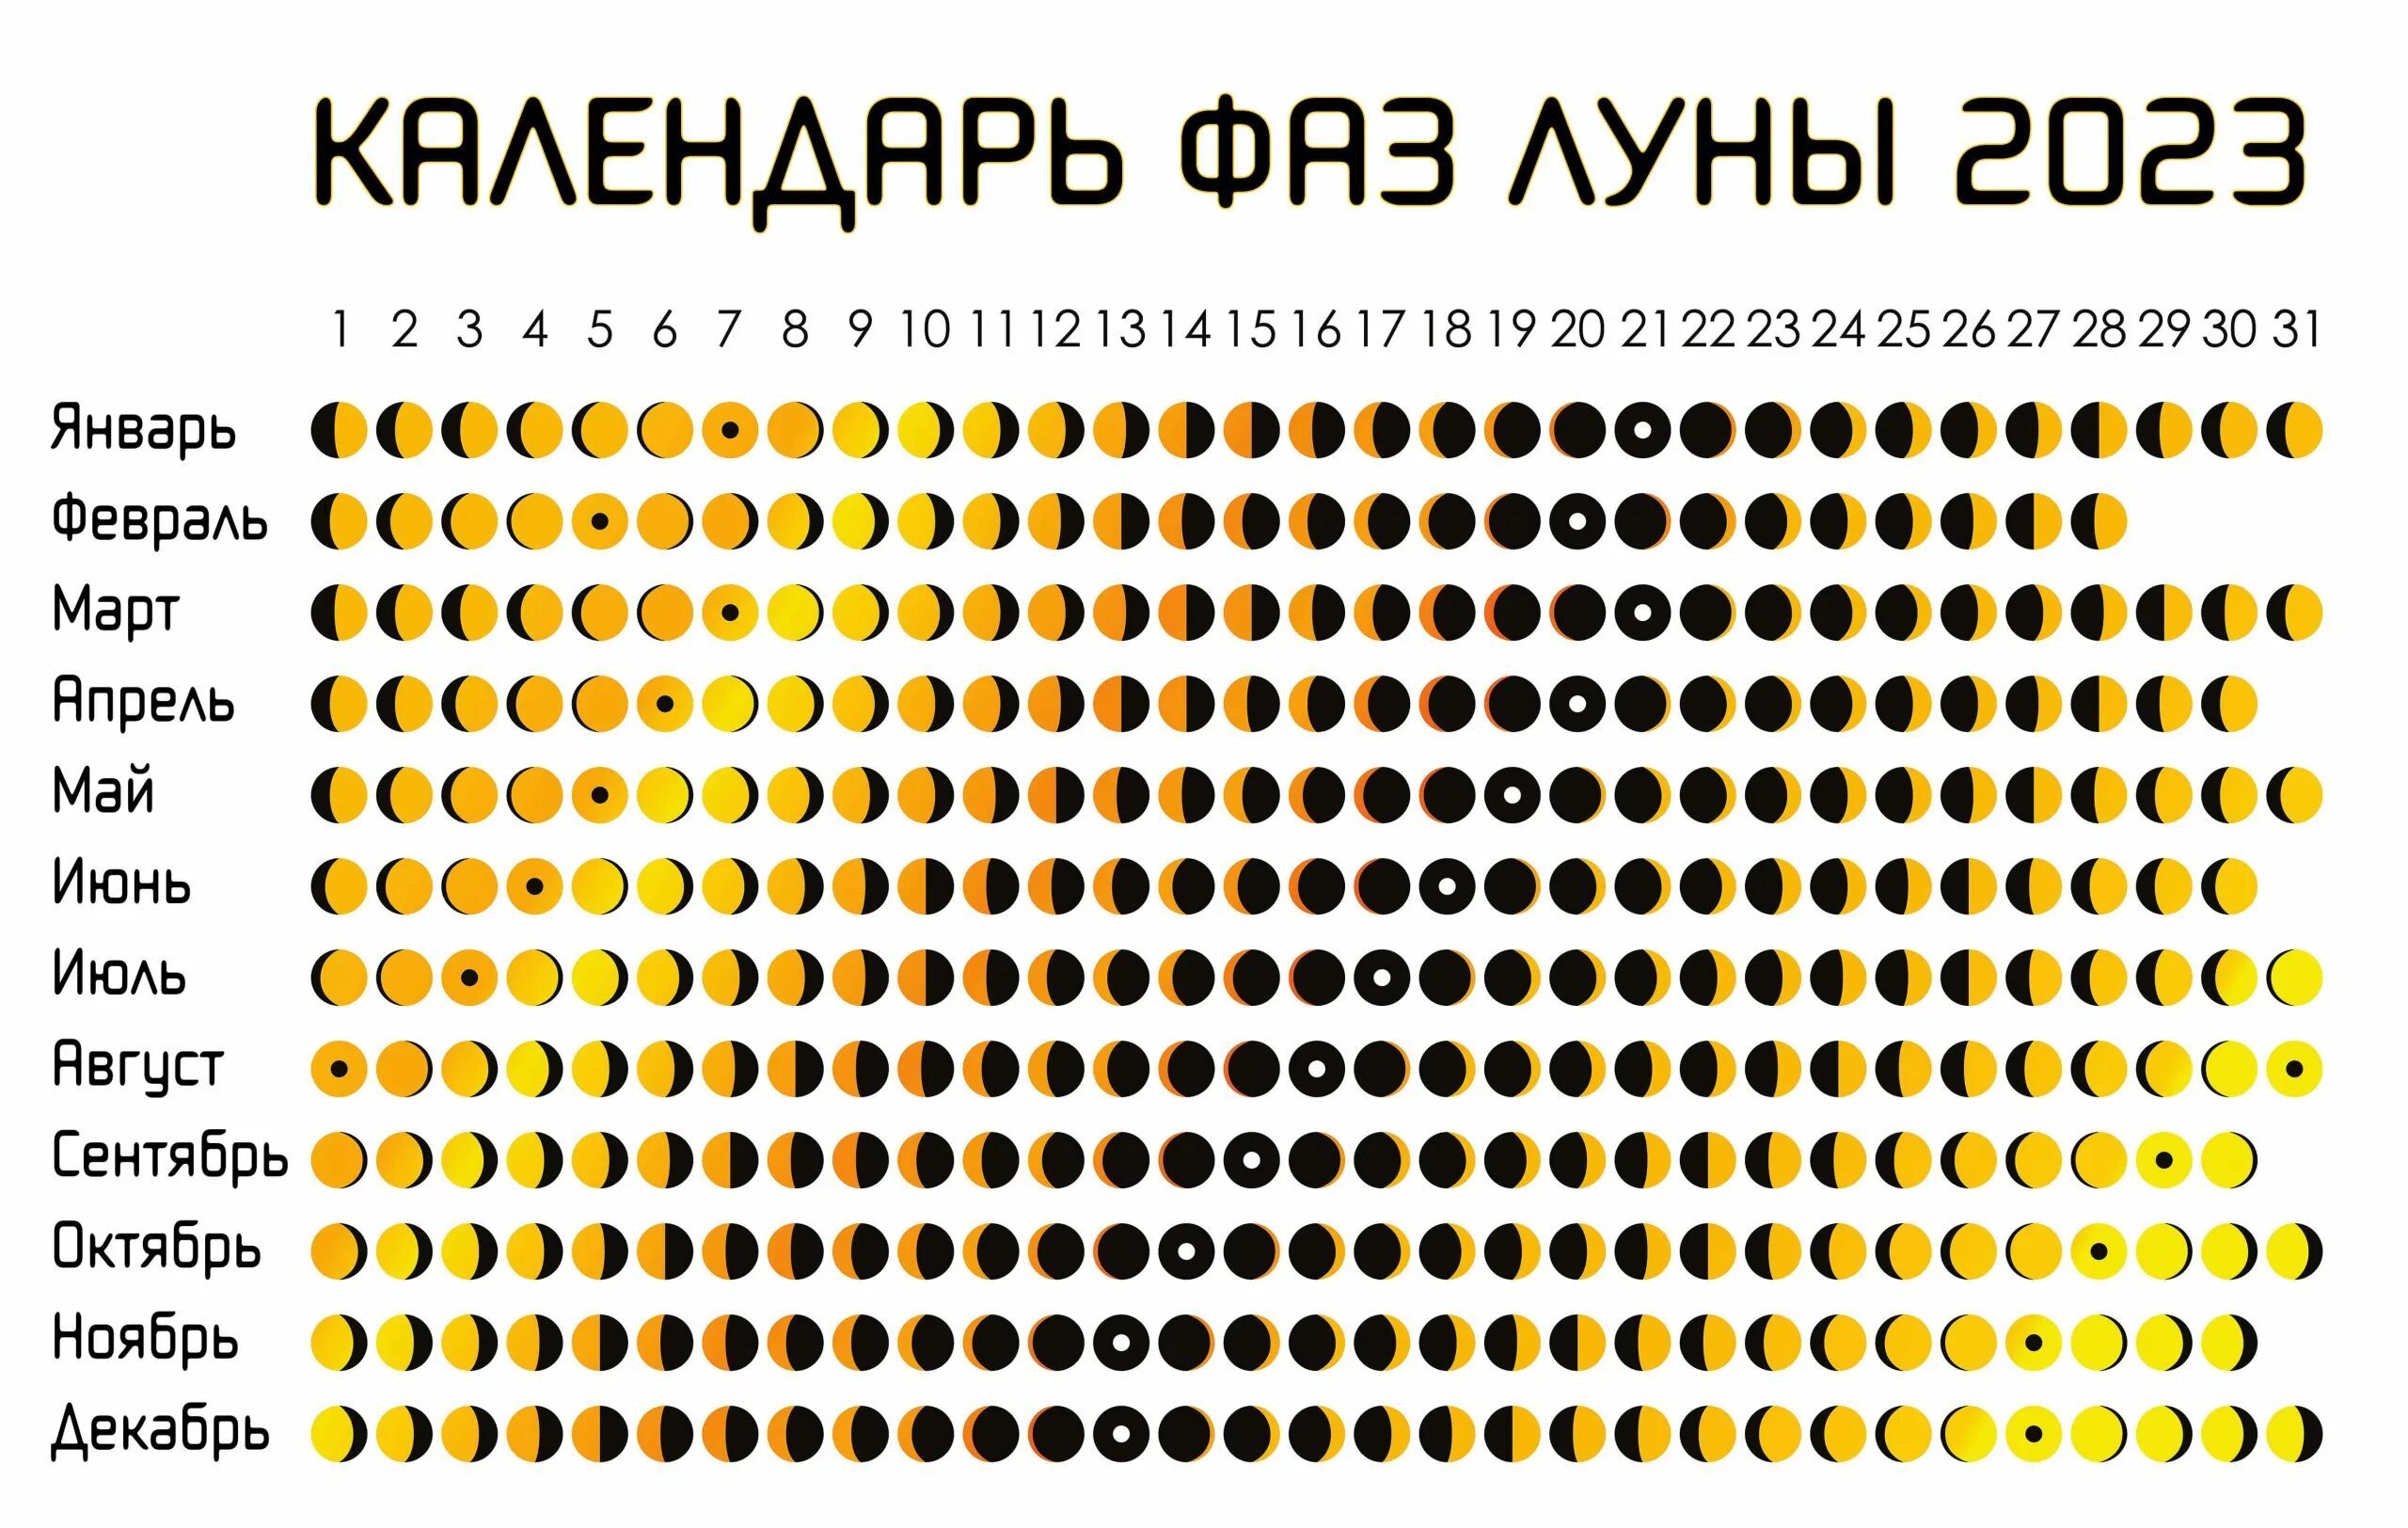 Фаза луны 23 год. Календарь на 2023 год с фазами Луны. Календарь фаз Луны на 2023. Календарь Луны на 2023 год. Lunar Calendar 1.0.